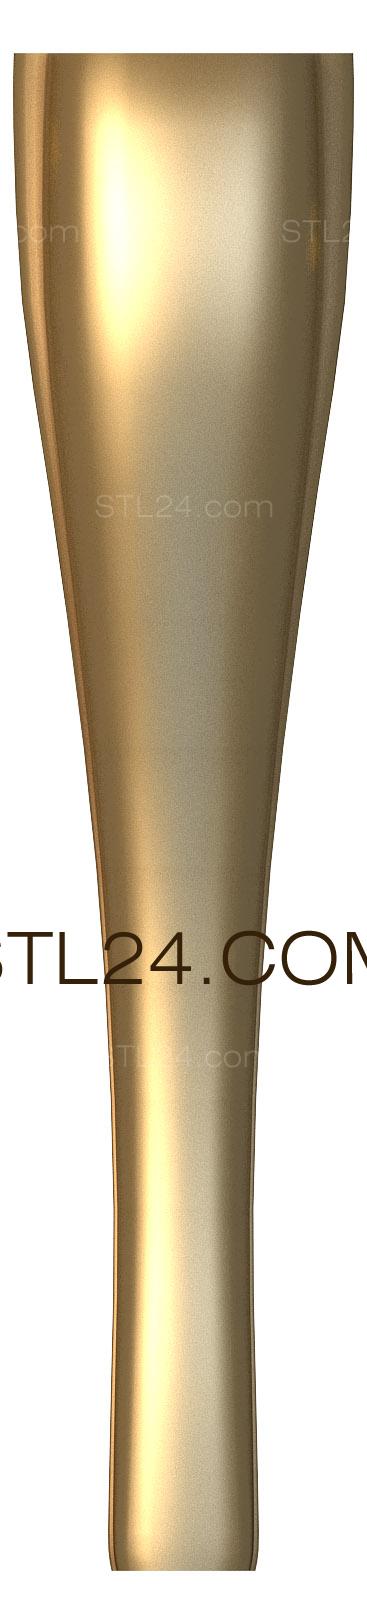 Legs (NJ_0437) 3D models for cnc